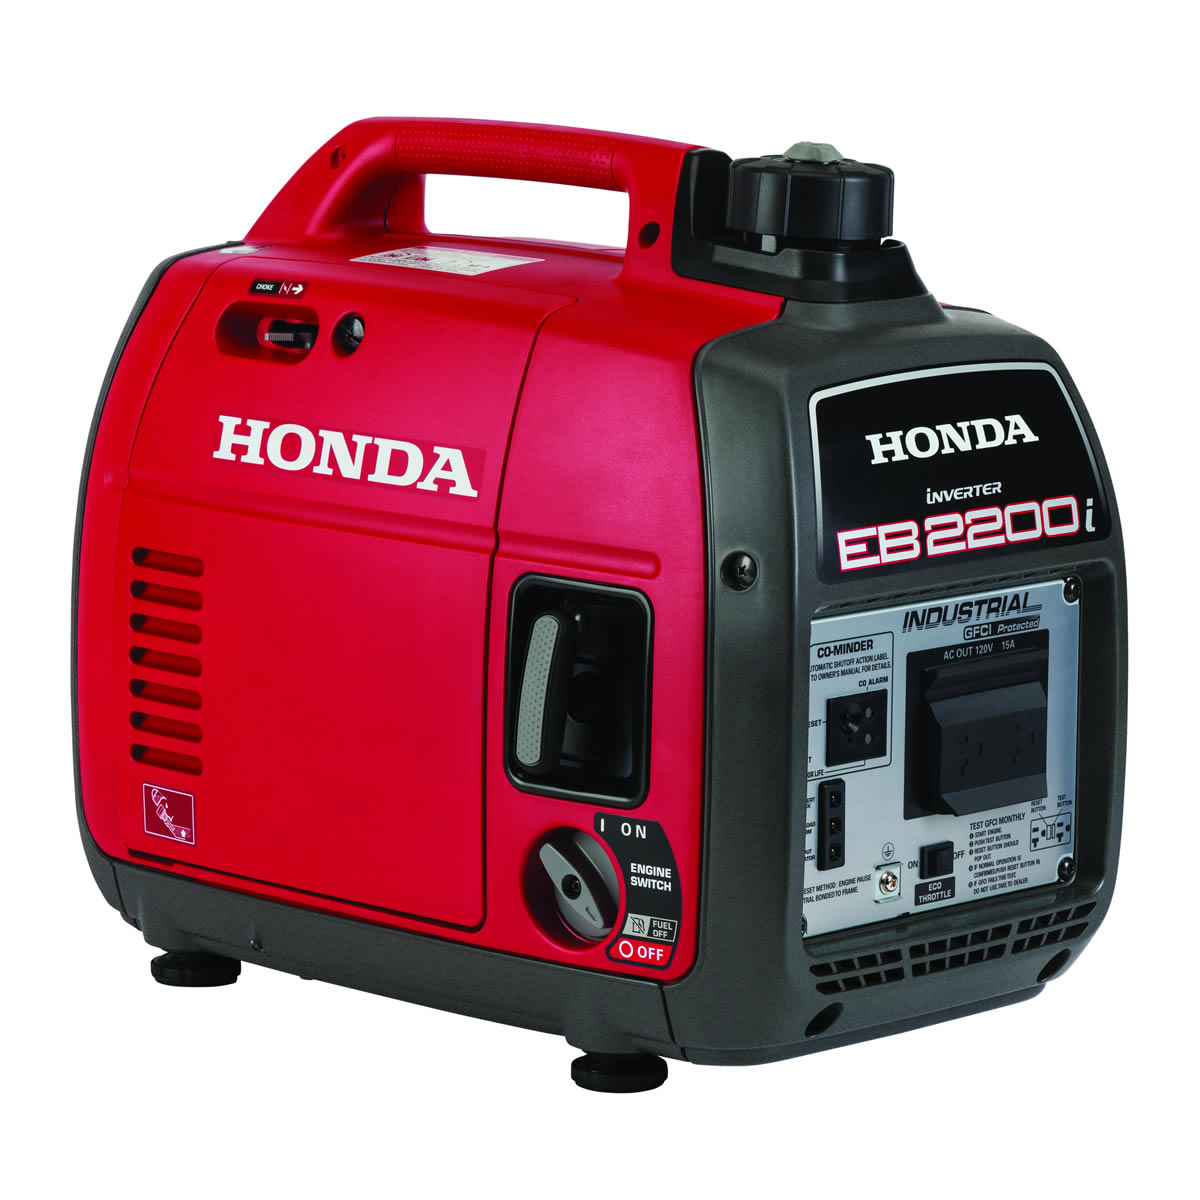 Honda EB2200i Industrial Series Generator